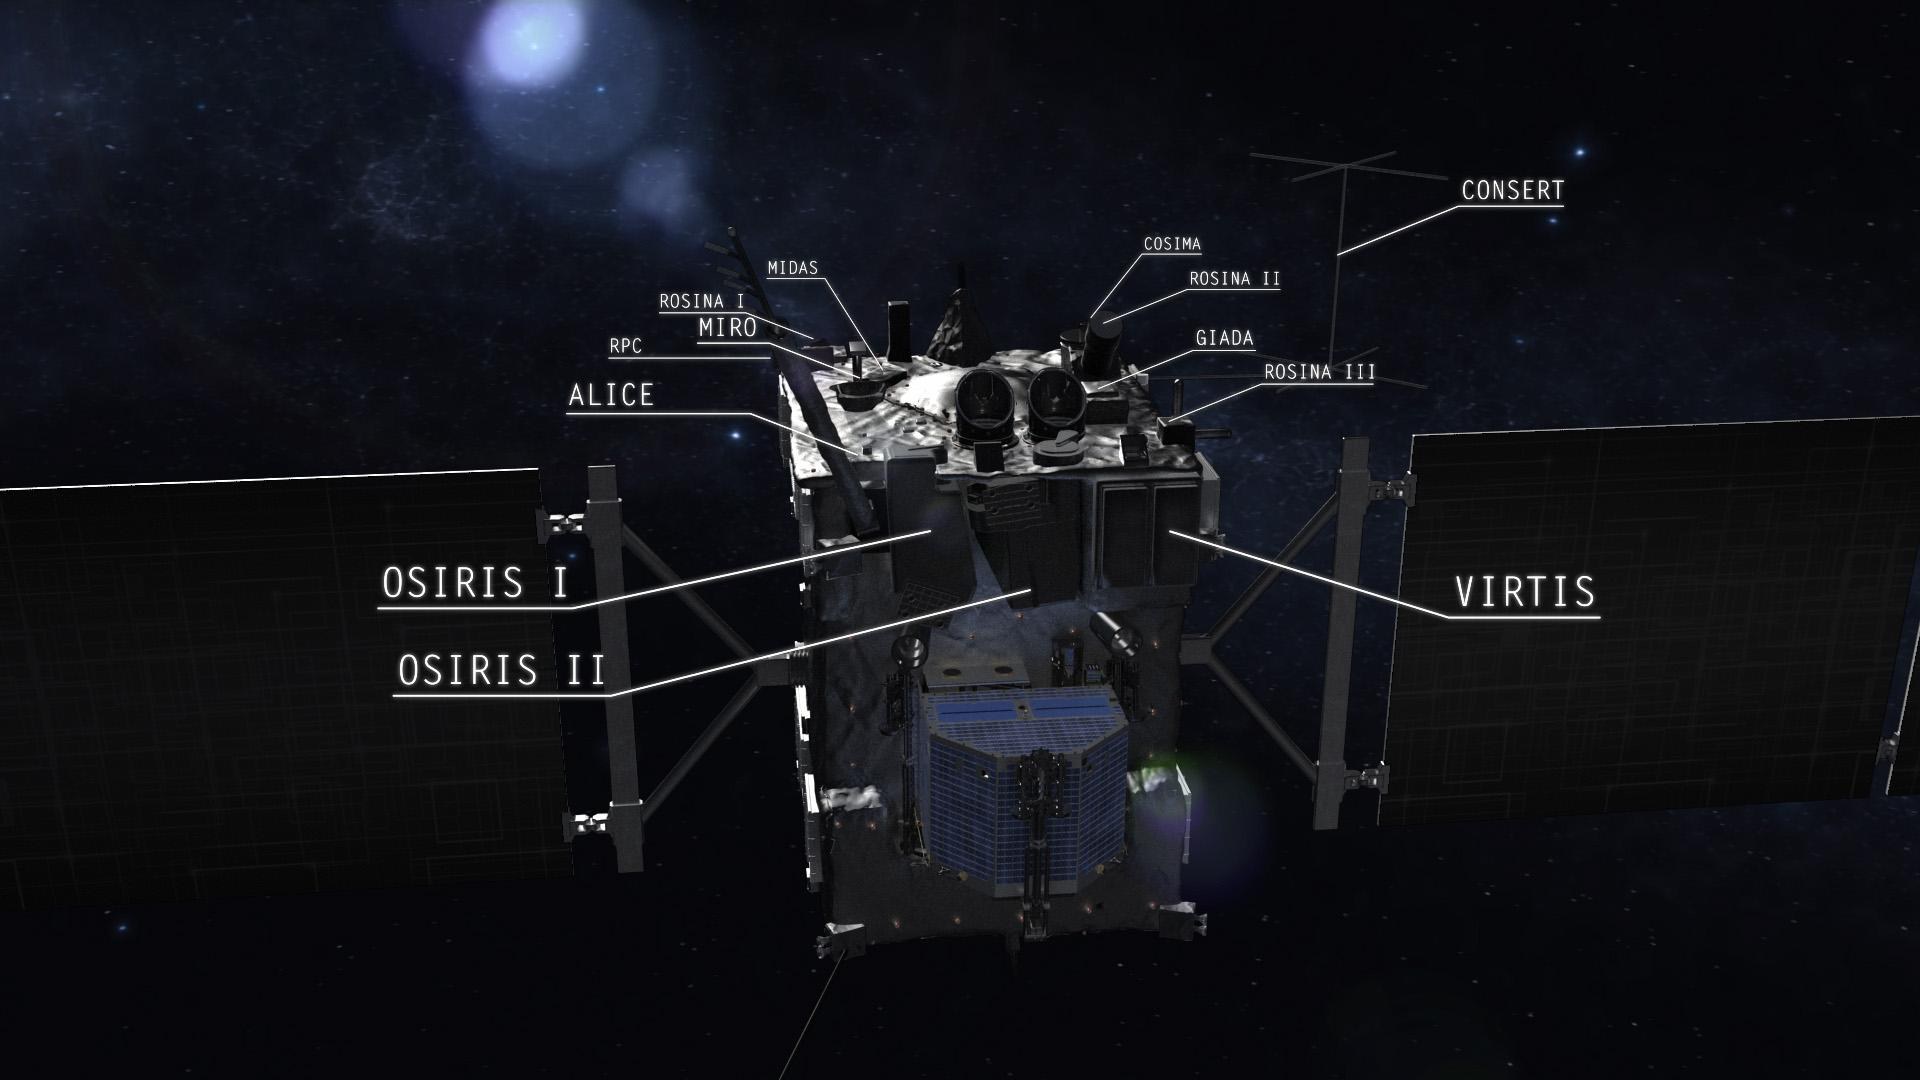 Rosetta orbiter - Overview of the instruments